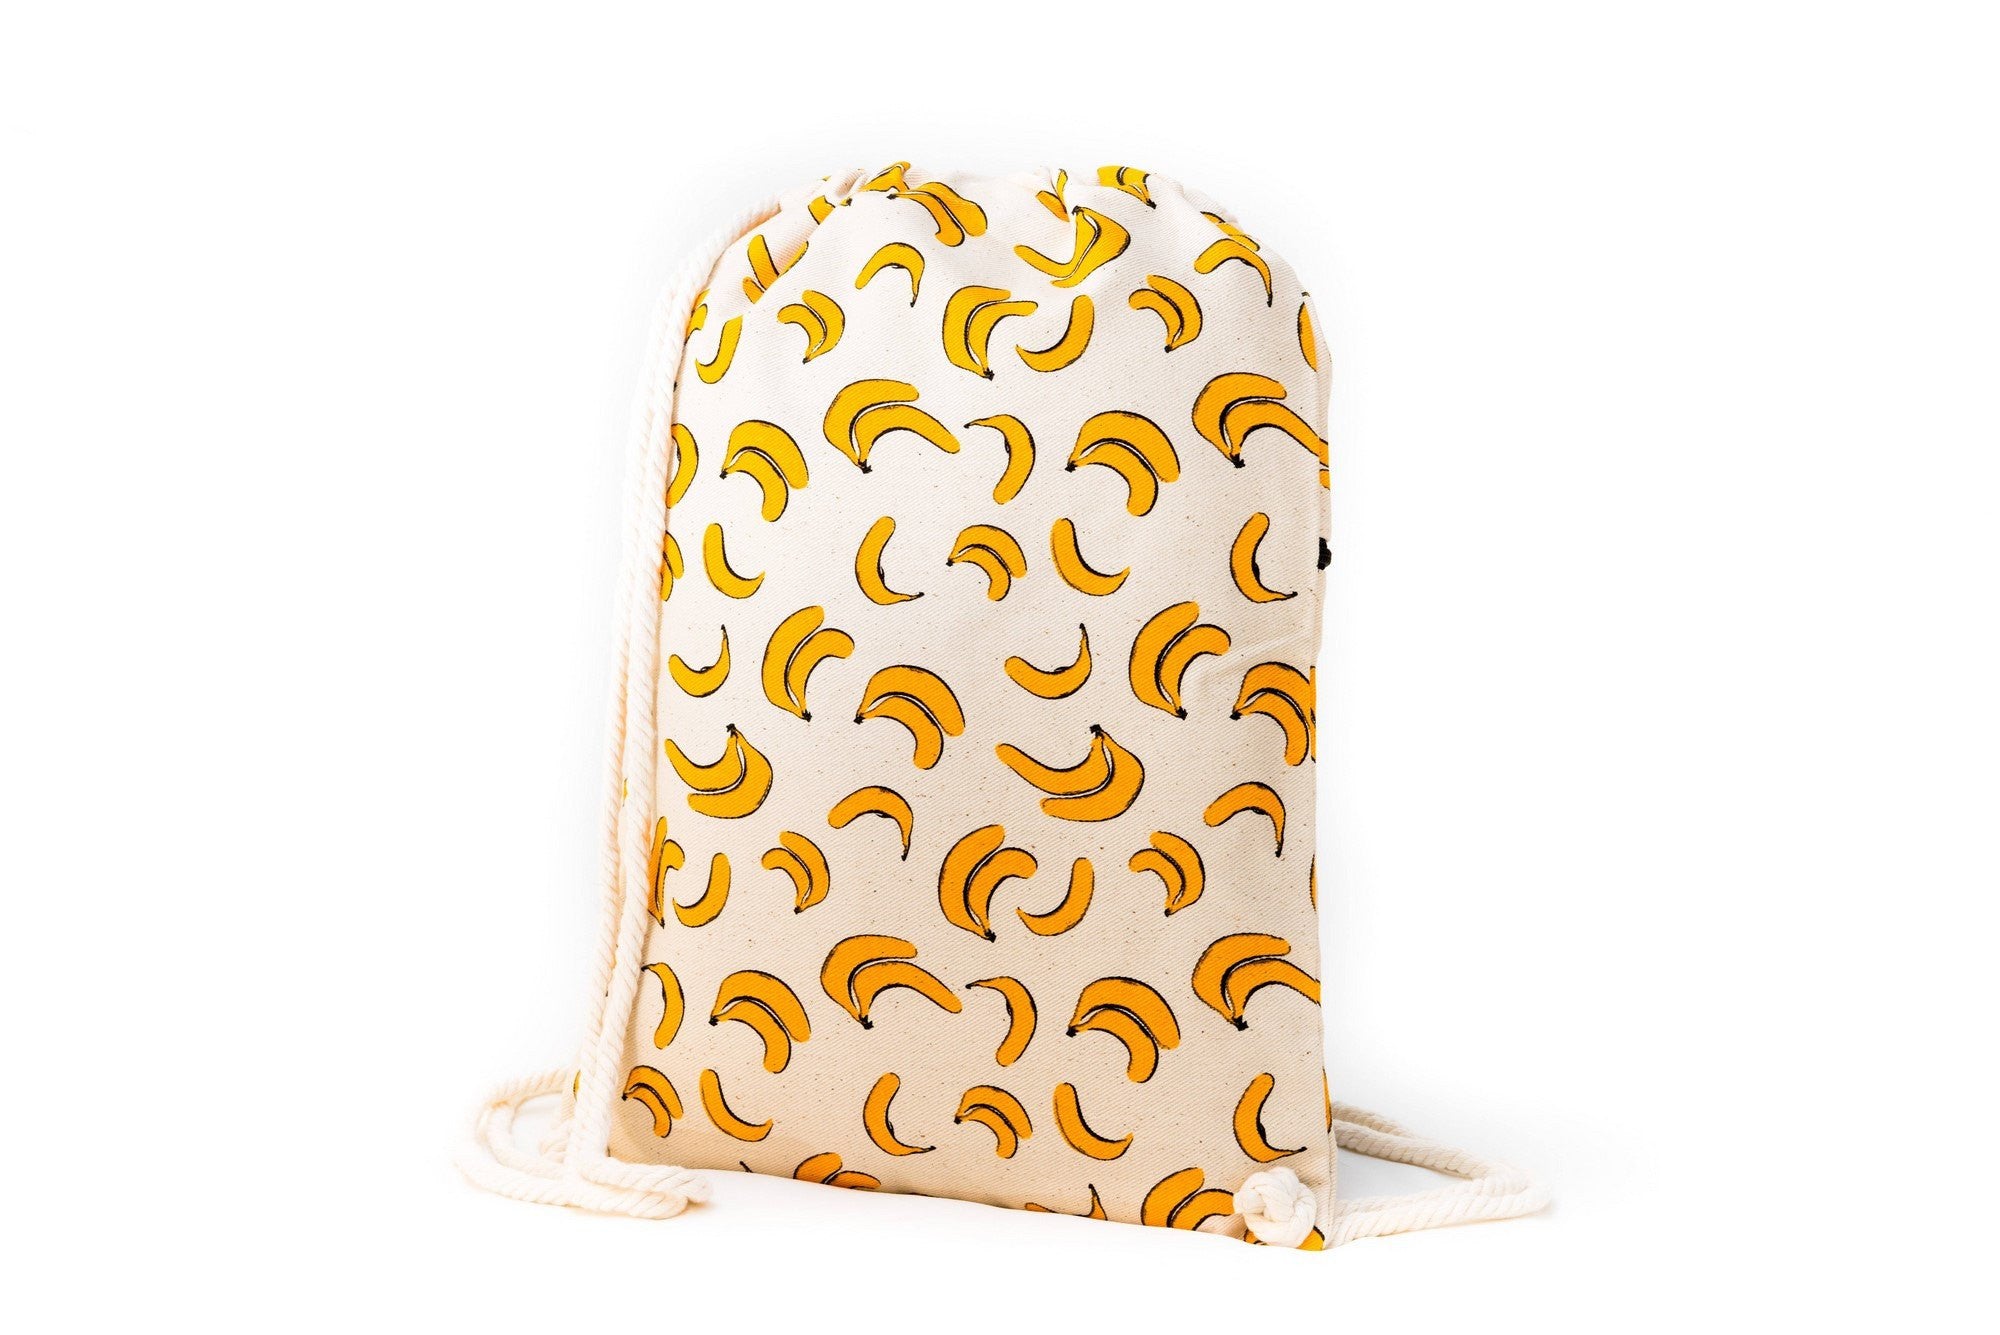 Drawstring Backpack - Drawstring Backpack - Canvas Cinch Daypack Sackpack By Lemur Bags (Bananas)